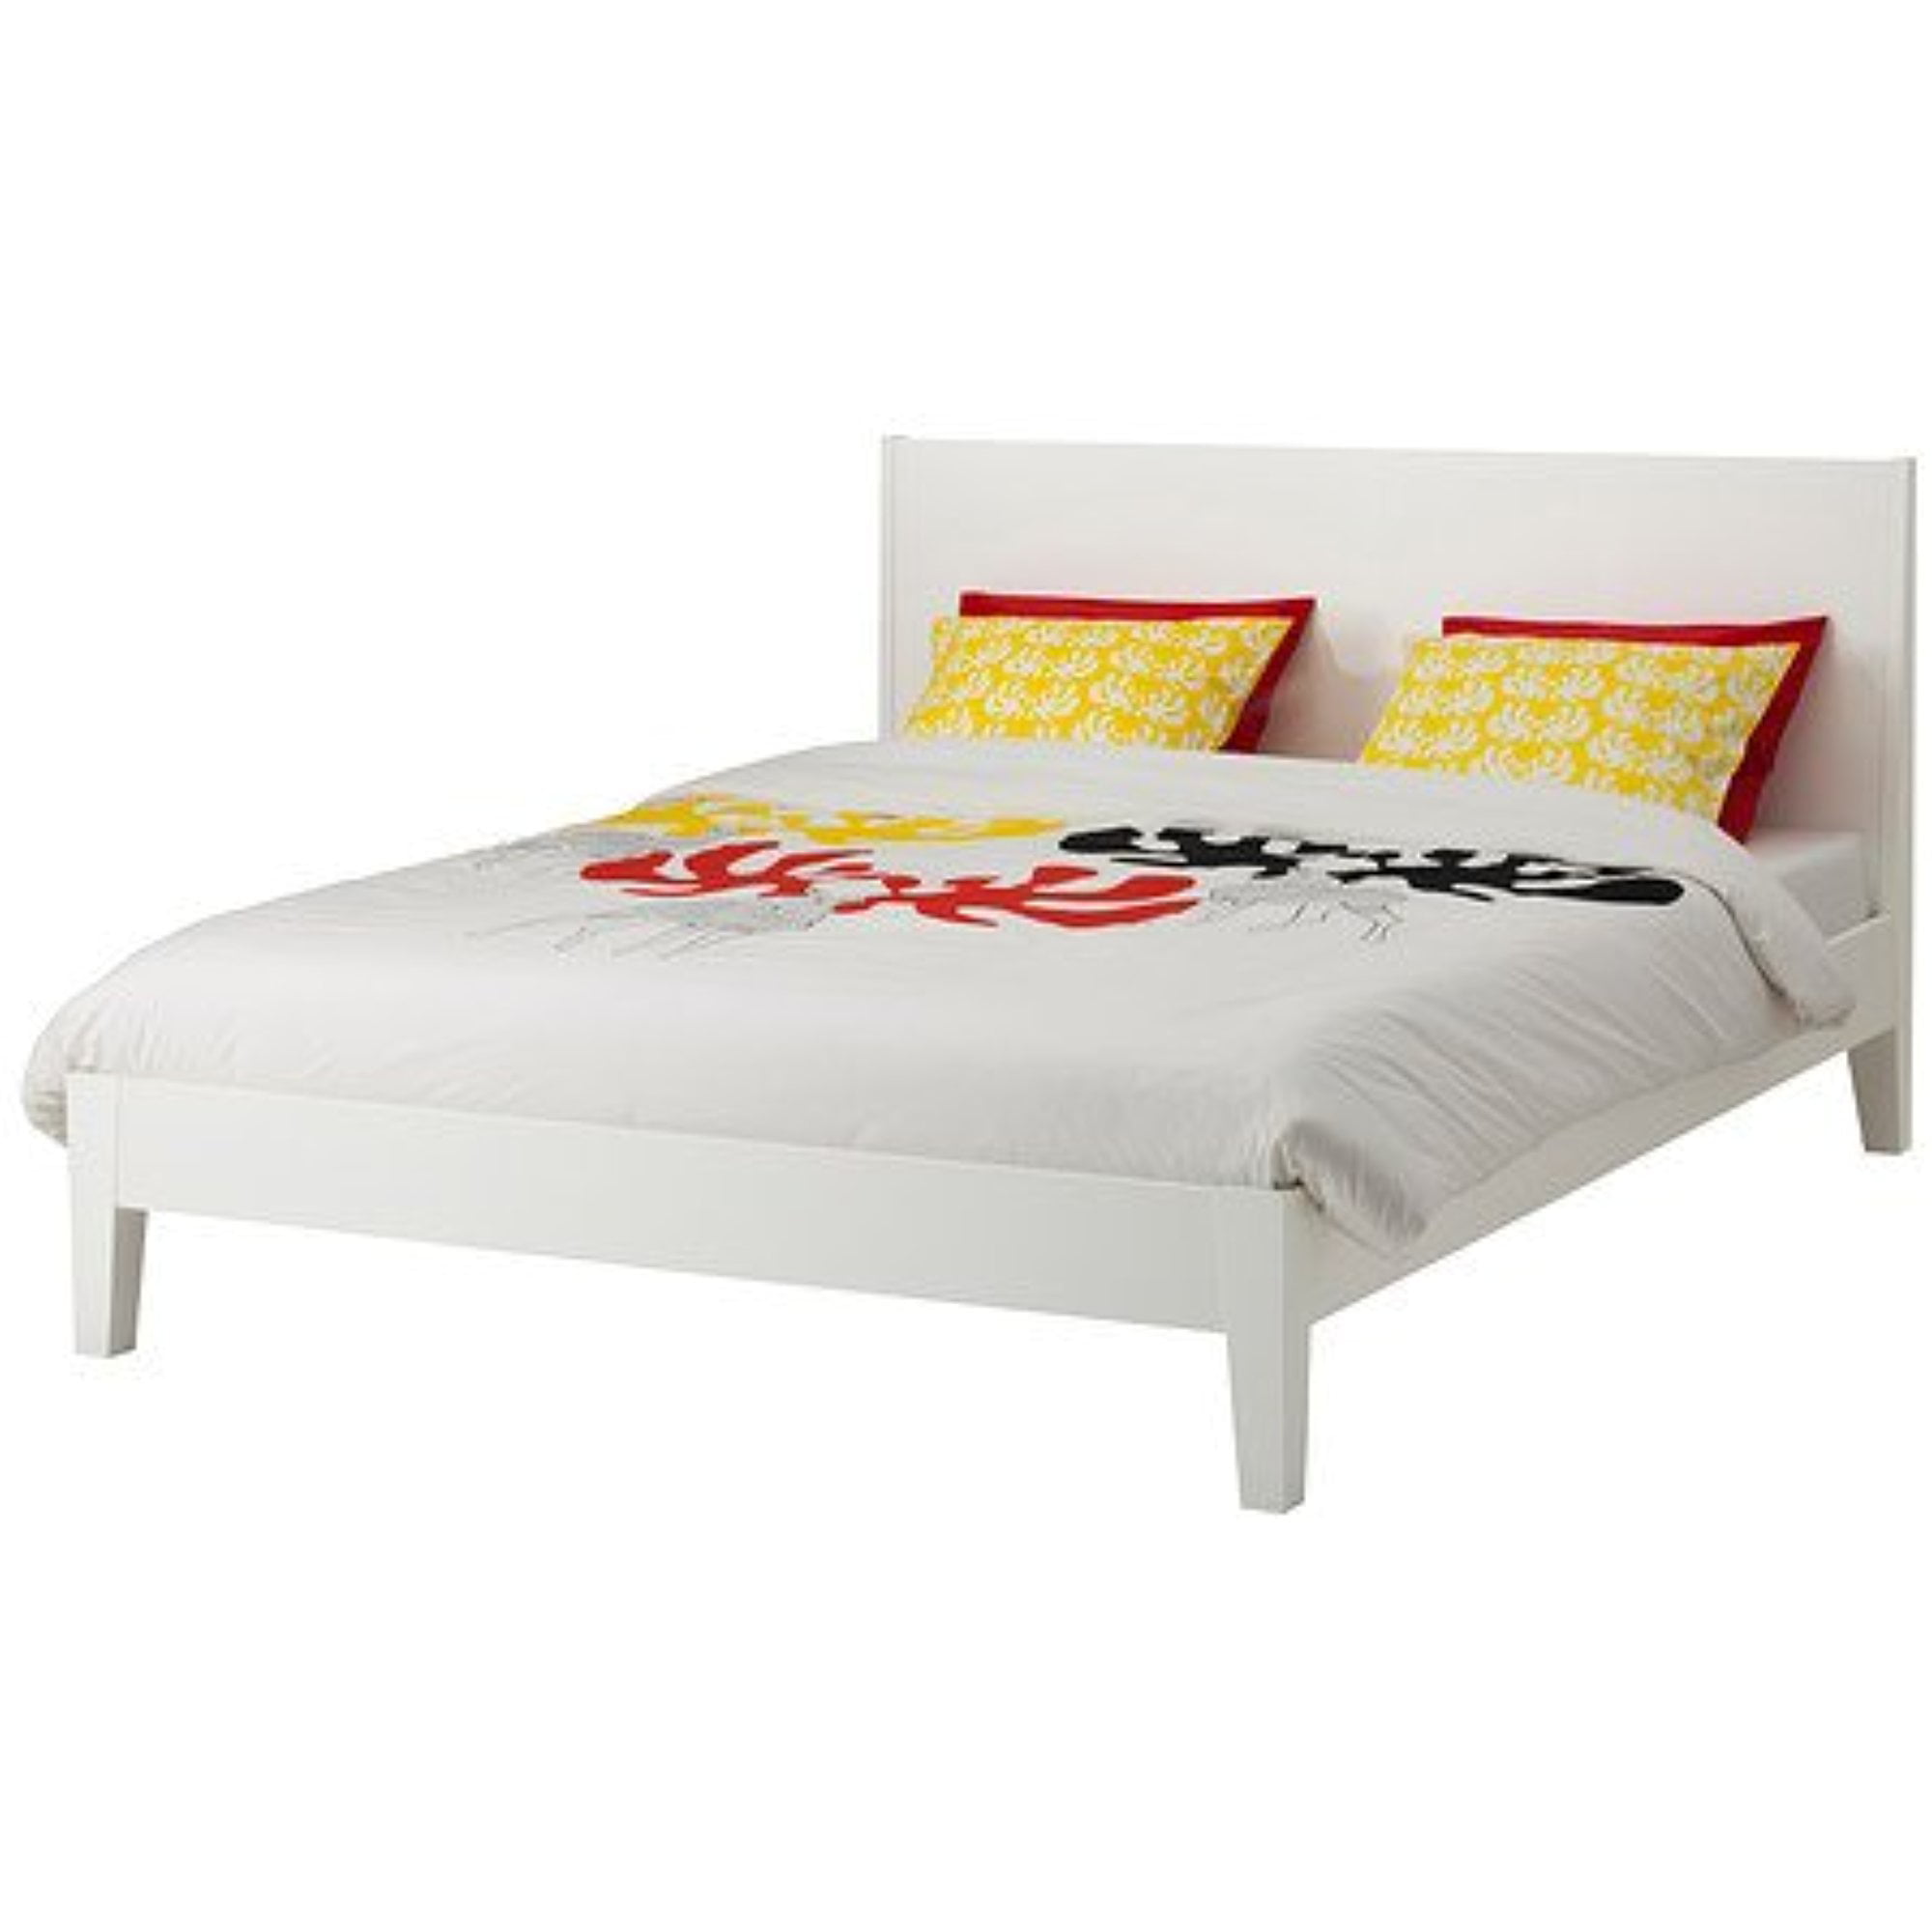 Ikea King Size Bed frame, white, Lönset , 38386.82920.46 - Walmart.com